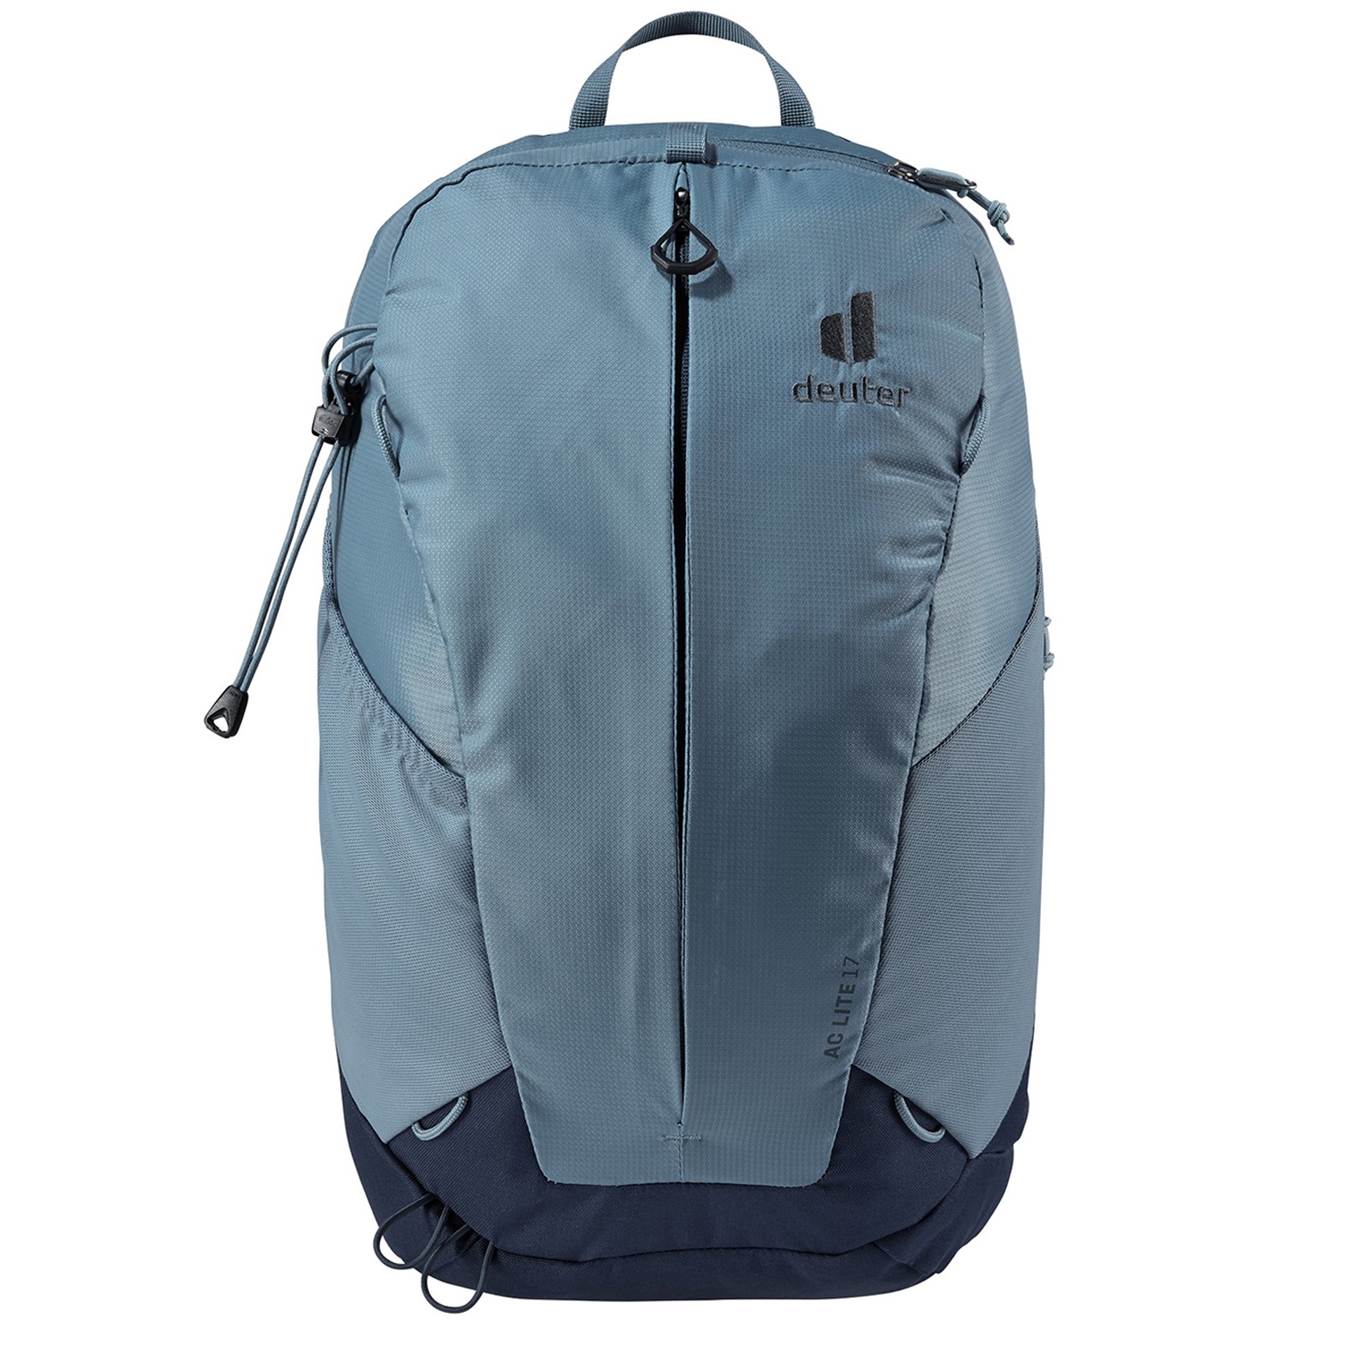 Deuter AC Lite 17 Backpack slateblue-marine backpack